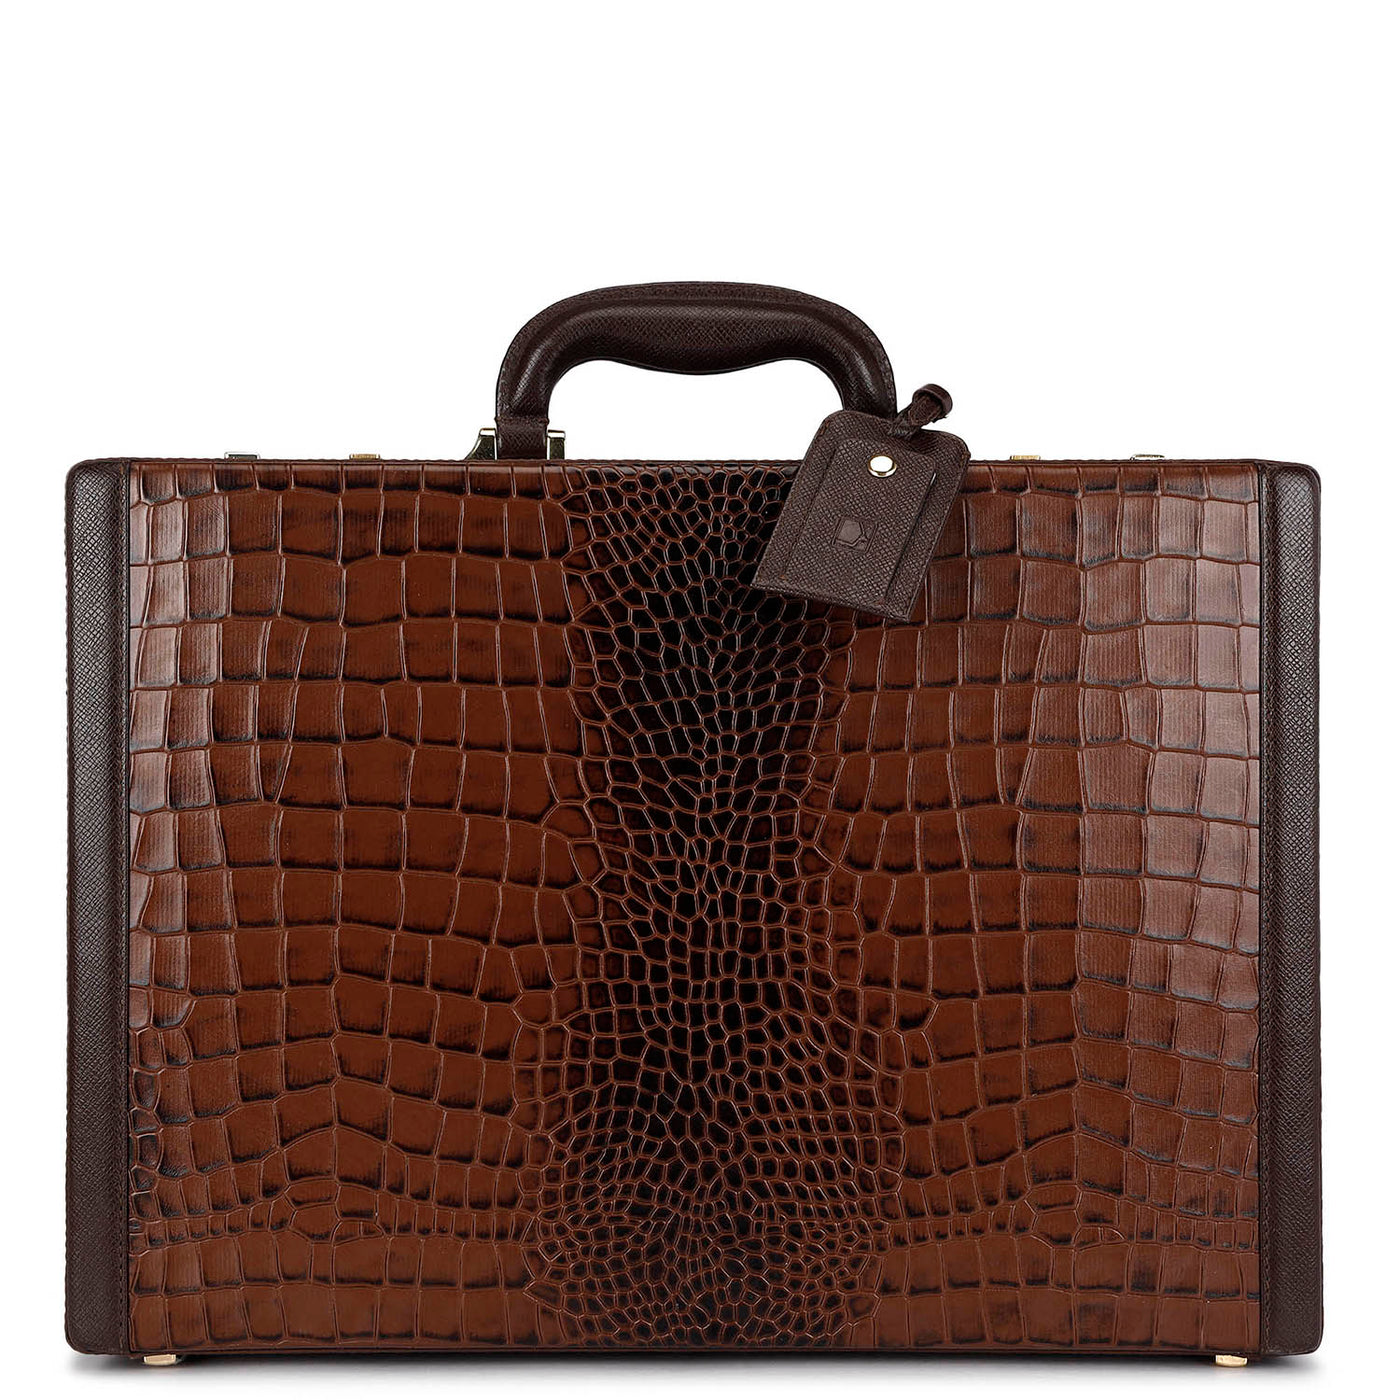 Croco Leather Brief Case - Brown